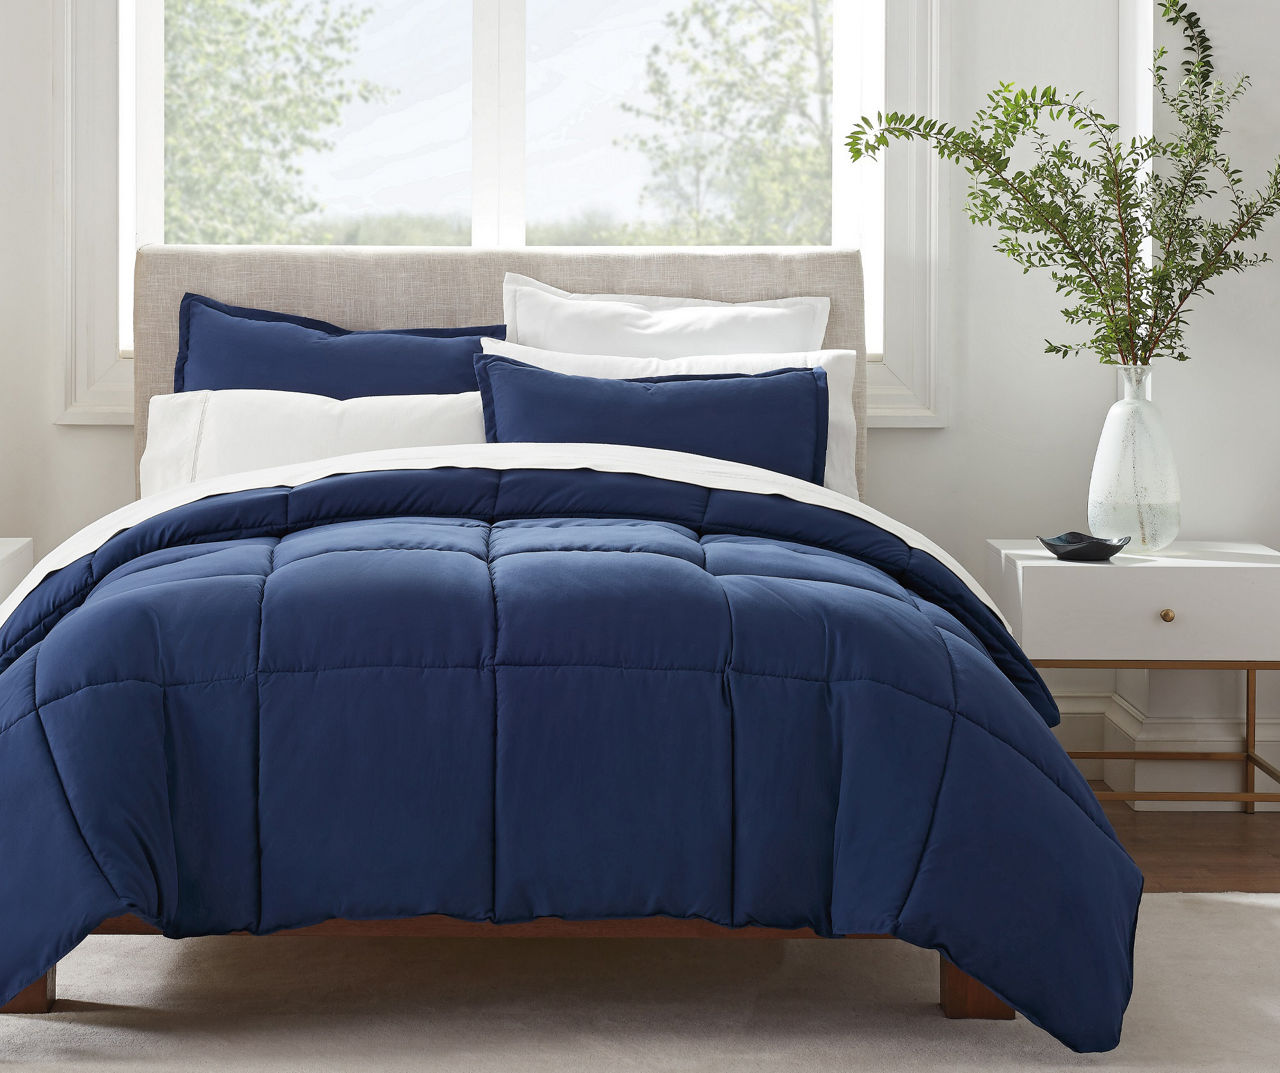 Serta Navy Simply Clean King 3-Piece Comforter Set | Big Lots